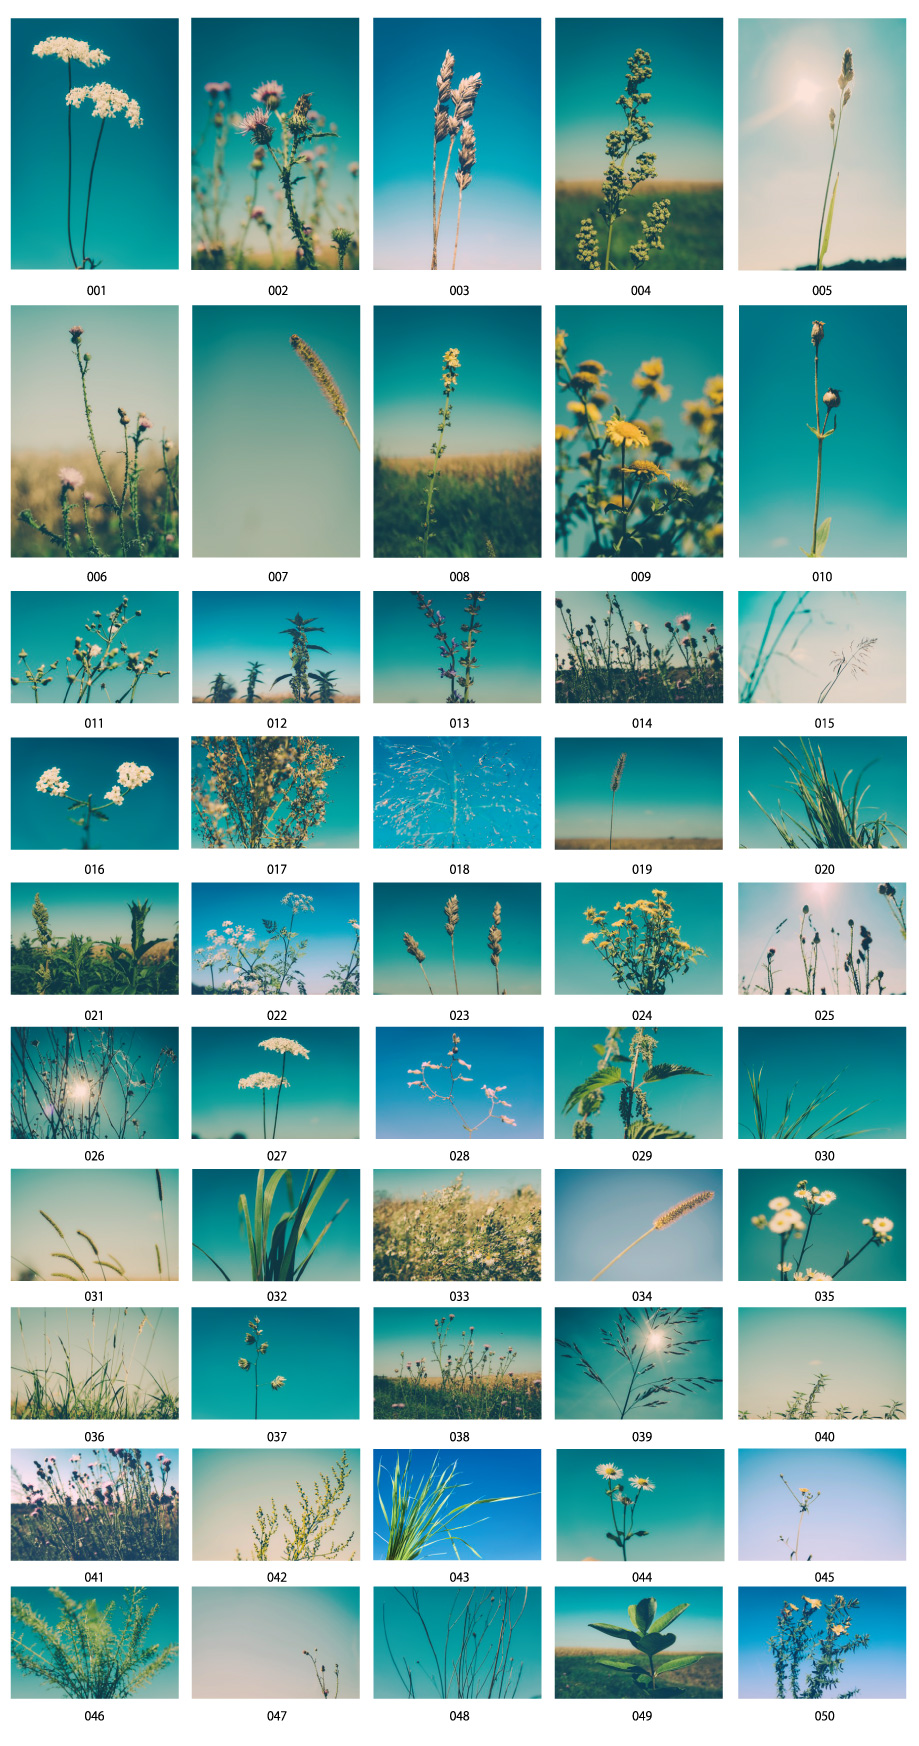 Blue sky and flowers Stock Photos